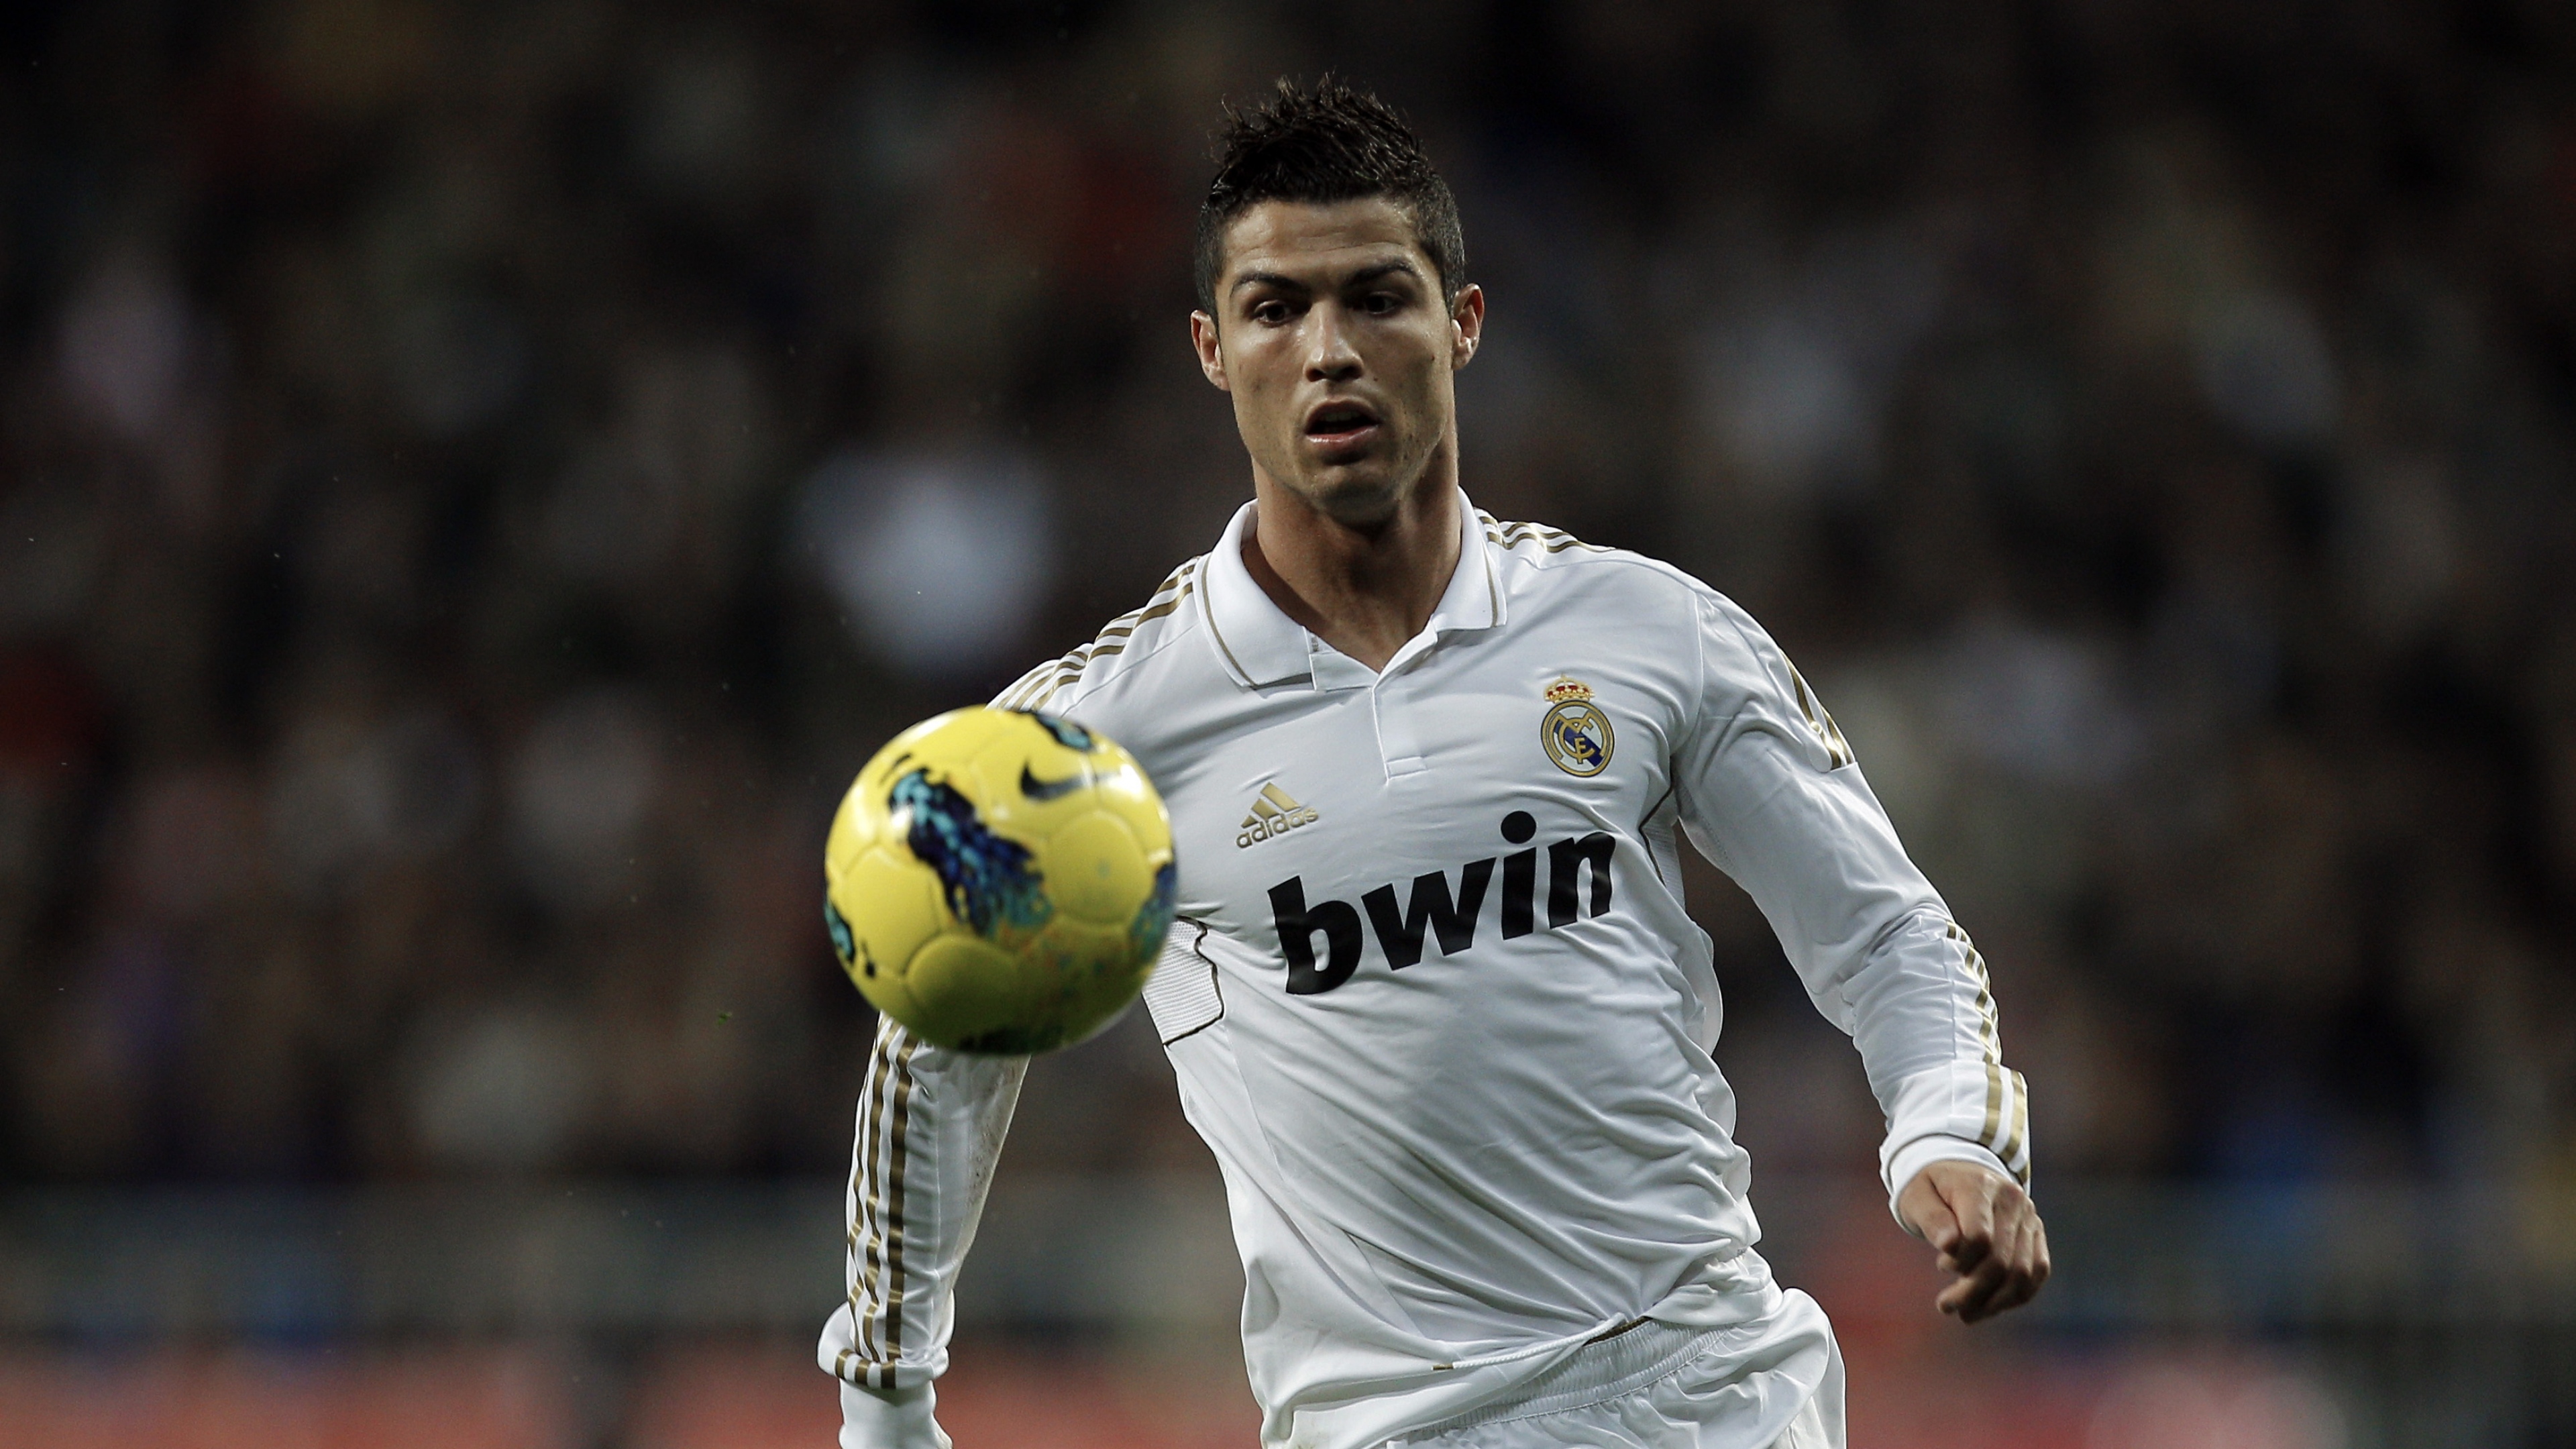 Cristiano Ronaldo Hd Free Football Background Mobile Desktop Download Wallpapers Pics